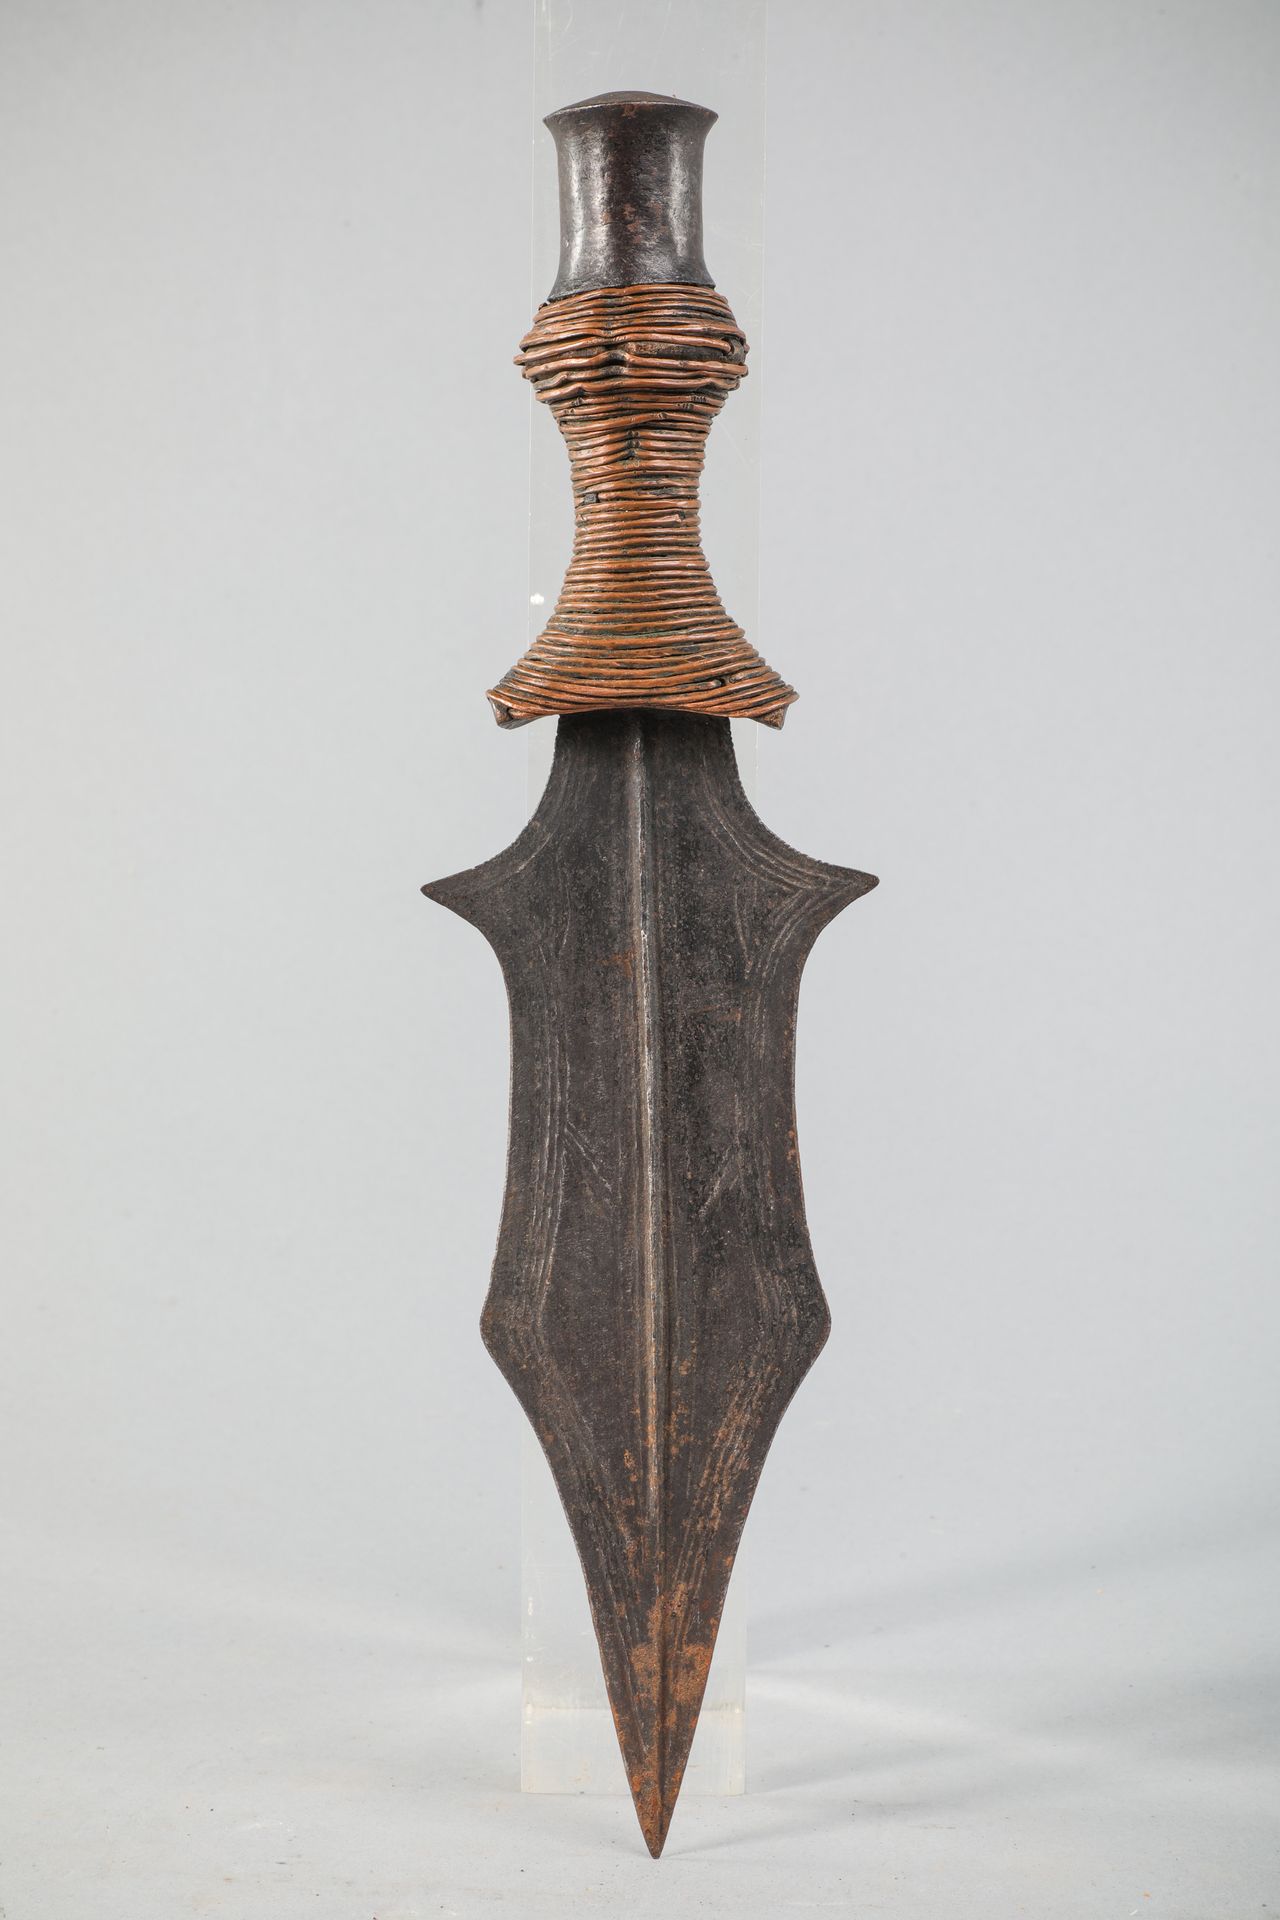 Null Prestige刀，刚果。刀片被加工成凹陷状。木头、锻铁、铁丝和铜板，有古老的光泽。长37厘米。